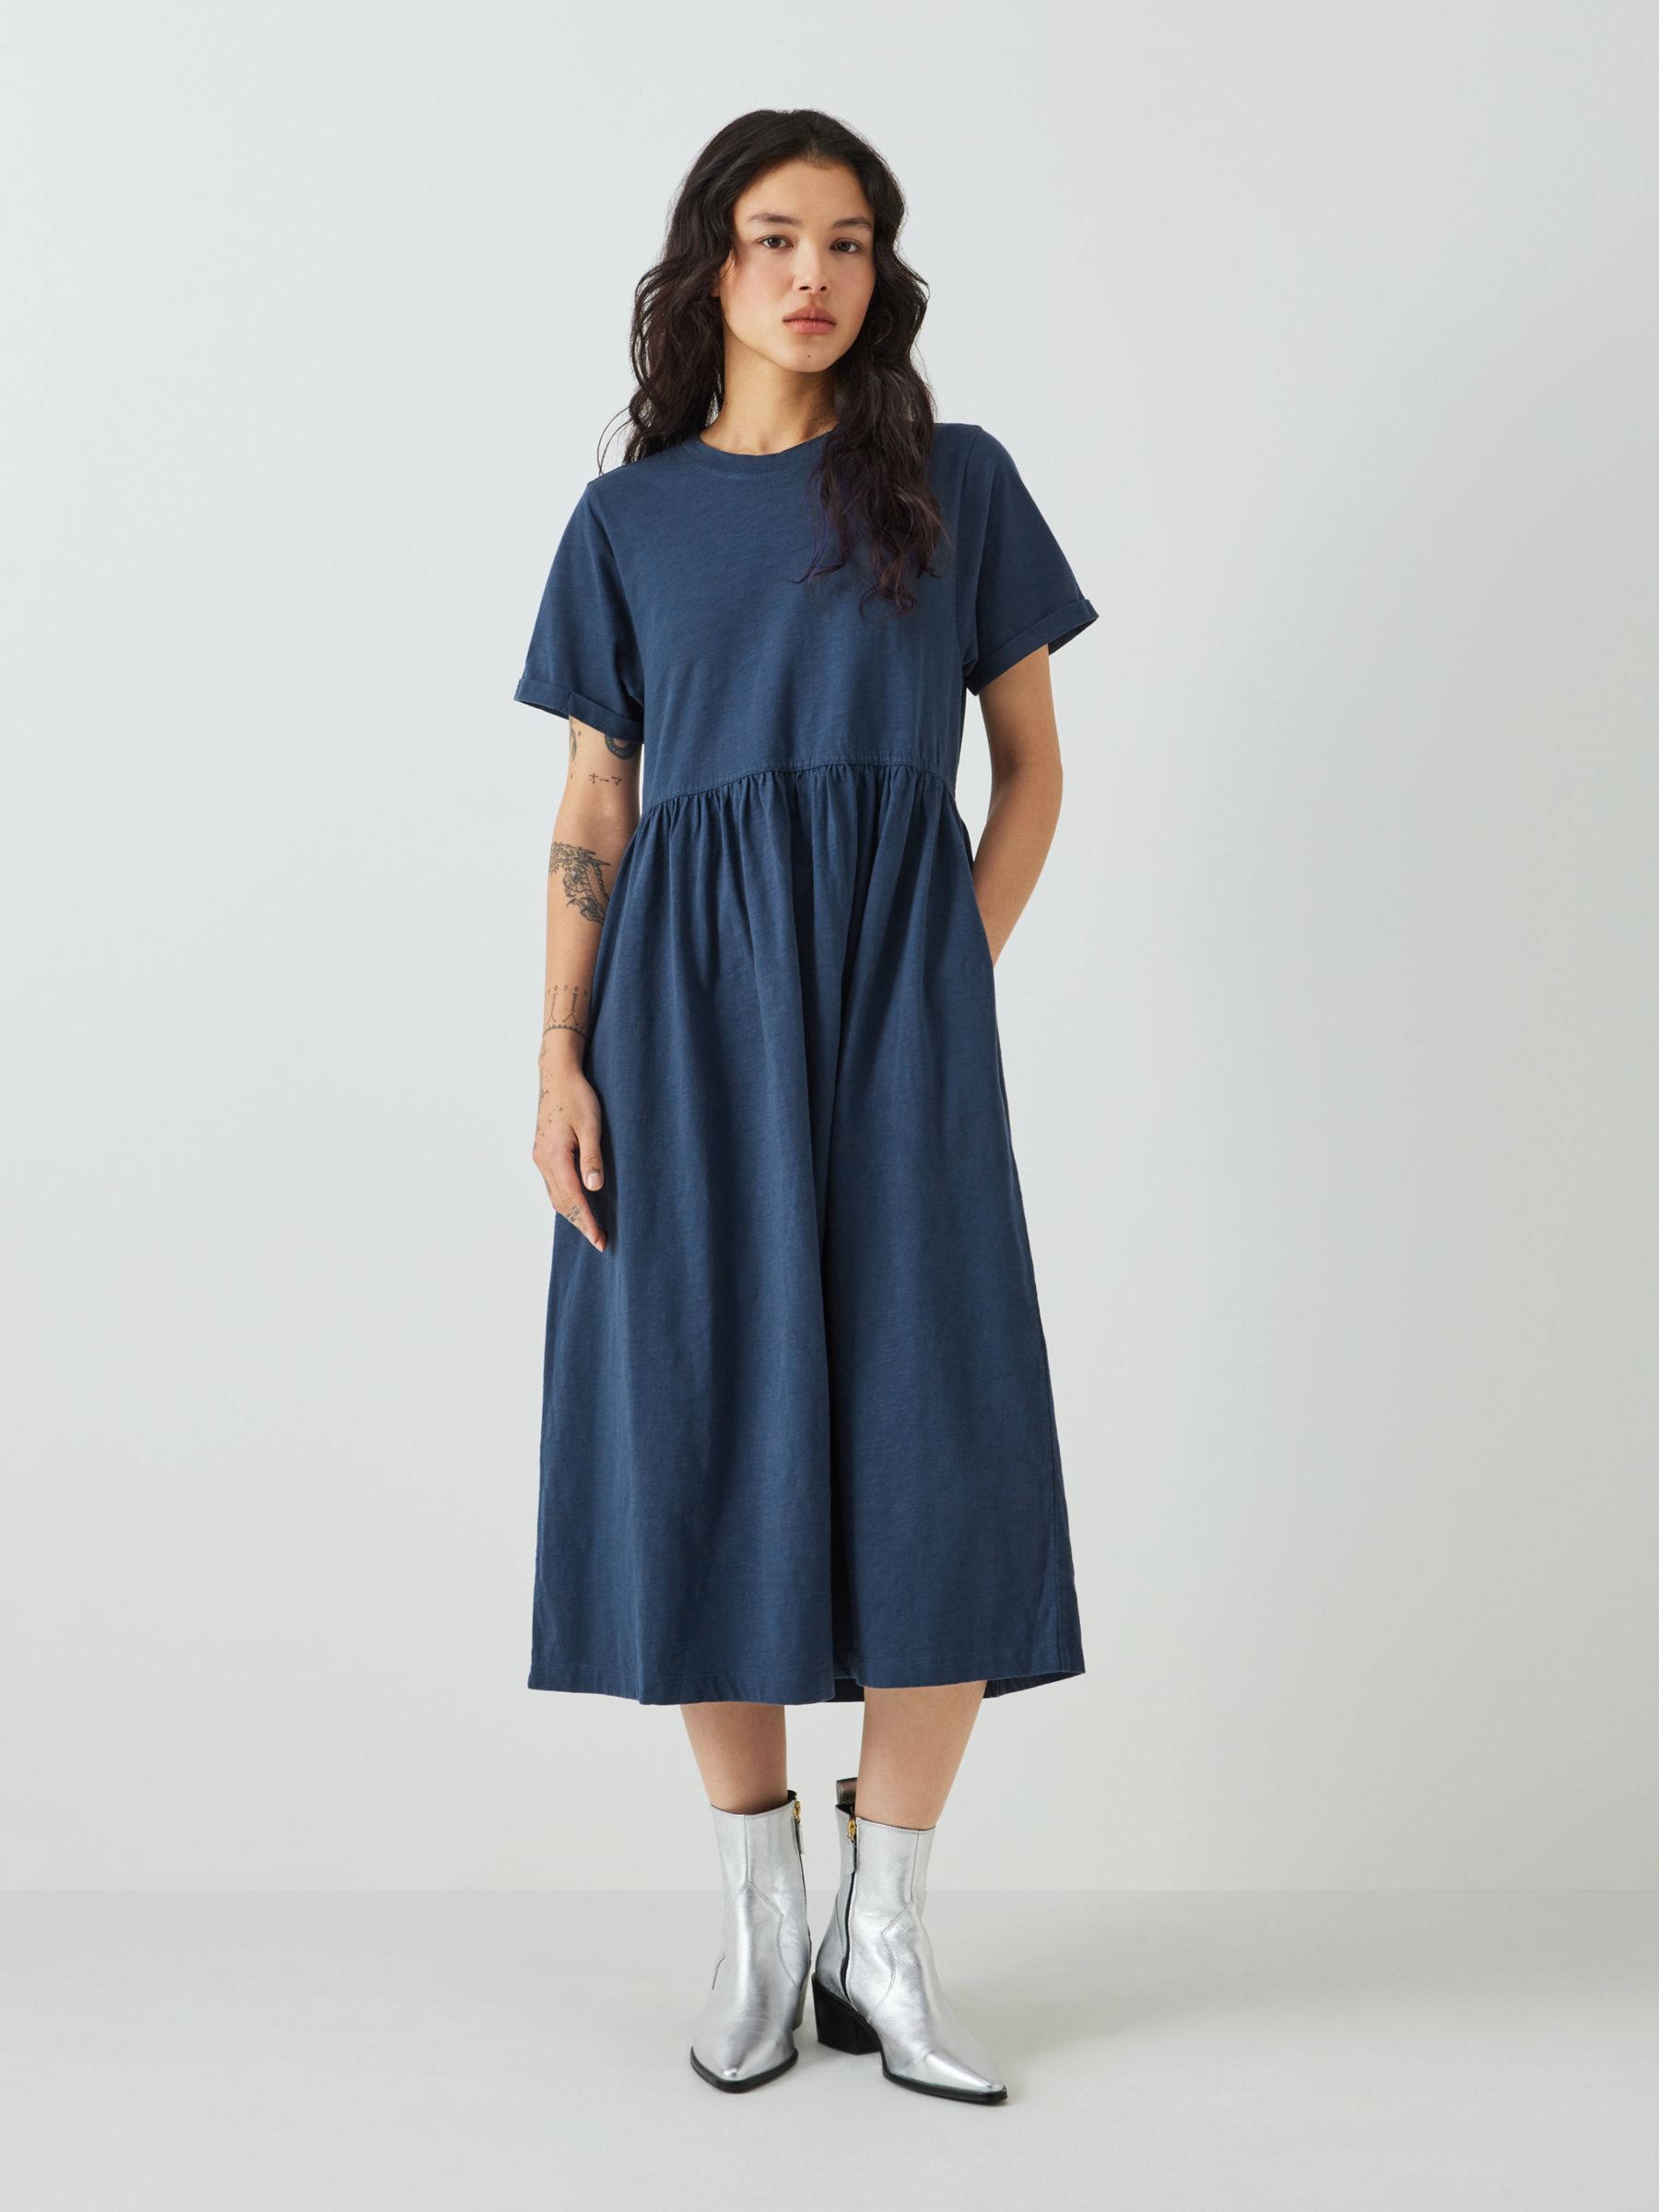 Women's sky blue dresses